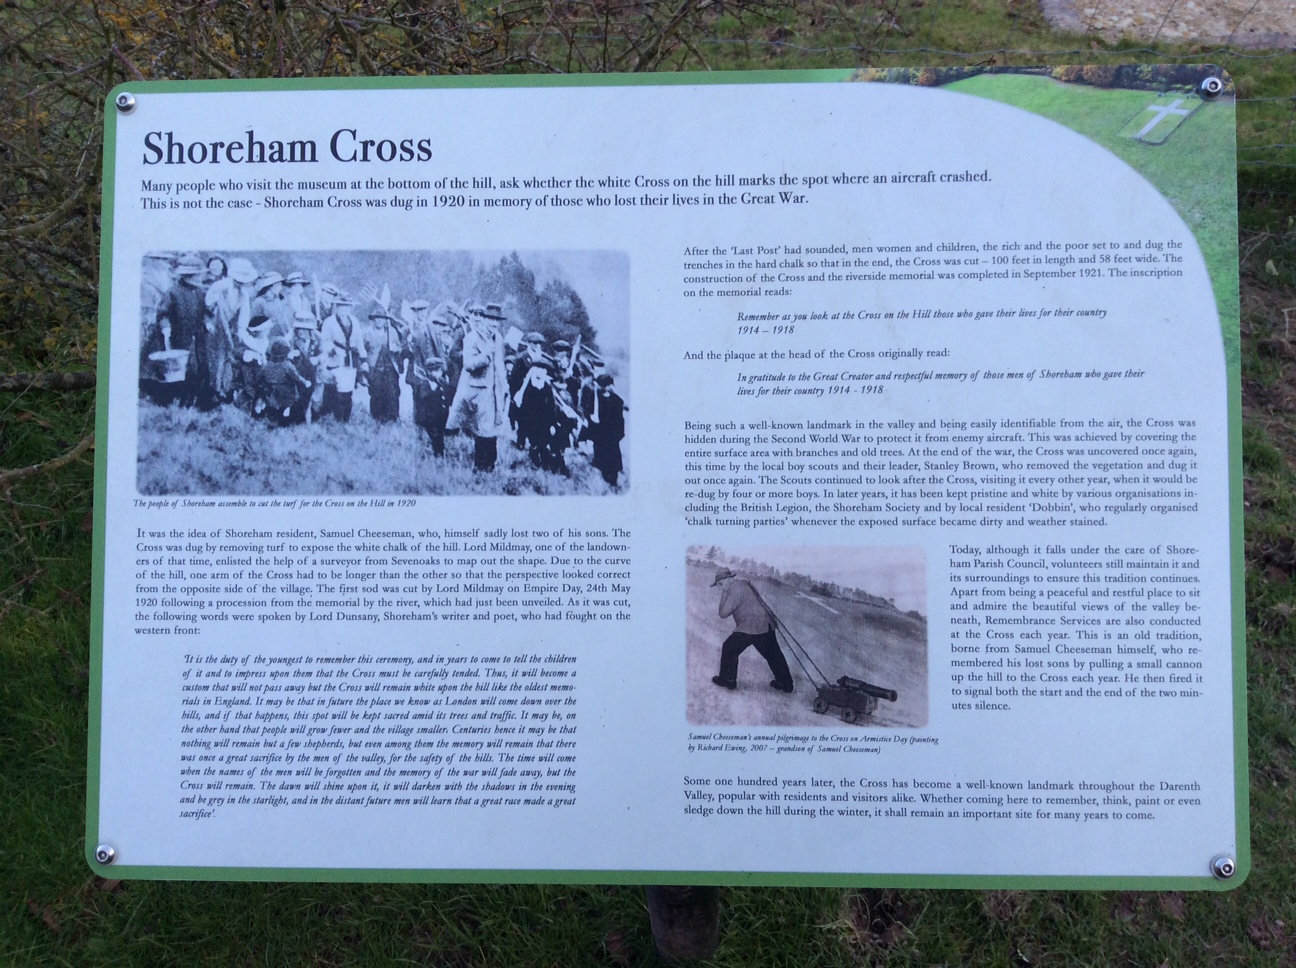 Information board about Shoreham Cross